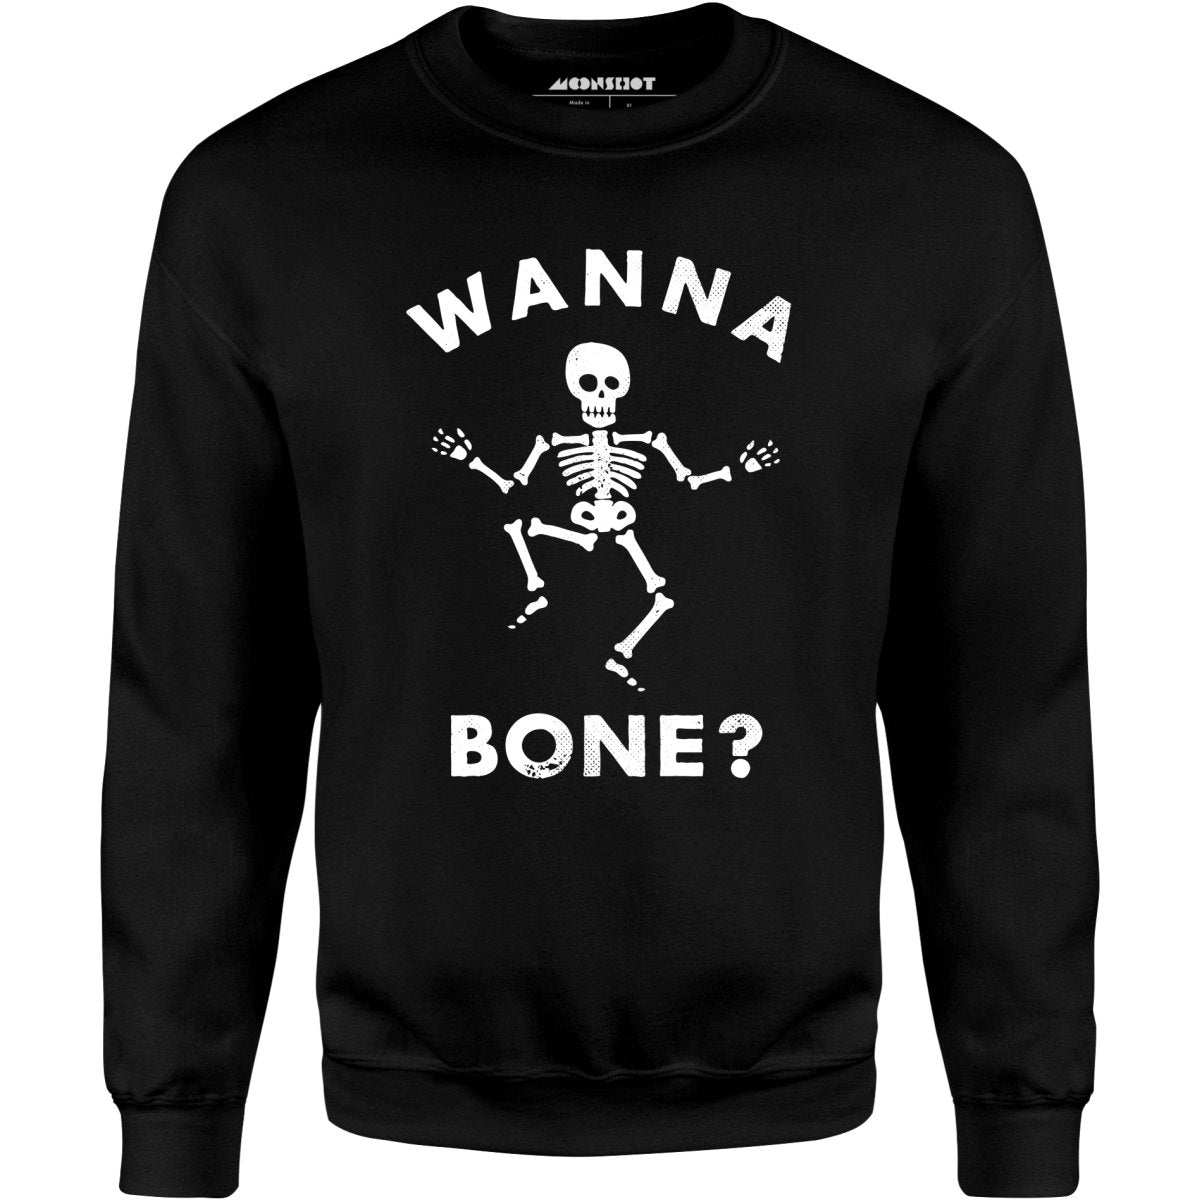 Wanna Bone? - Unisex Sweatshirt